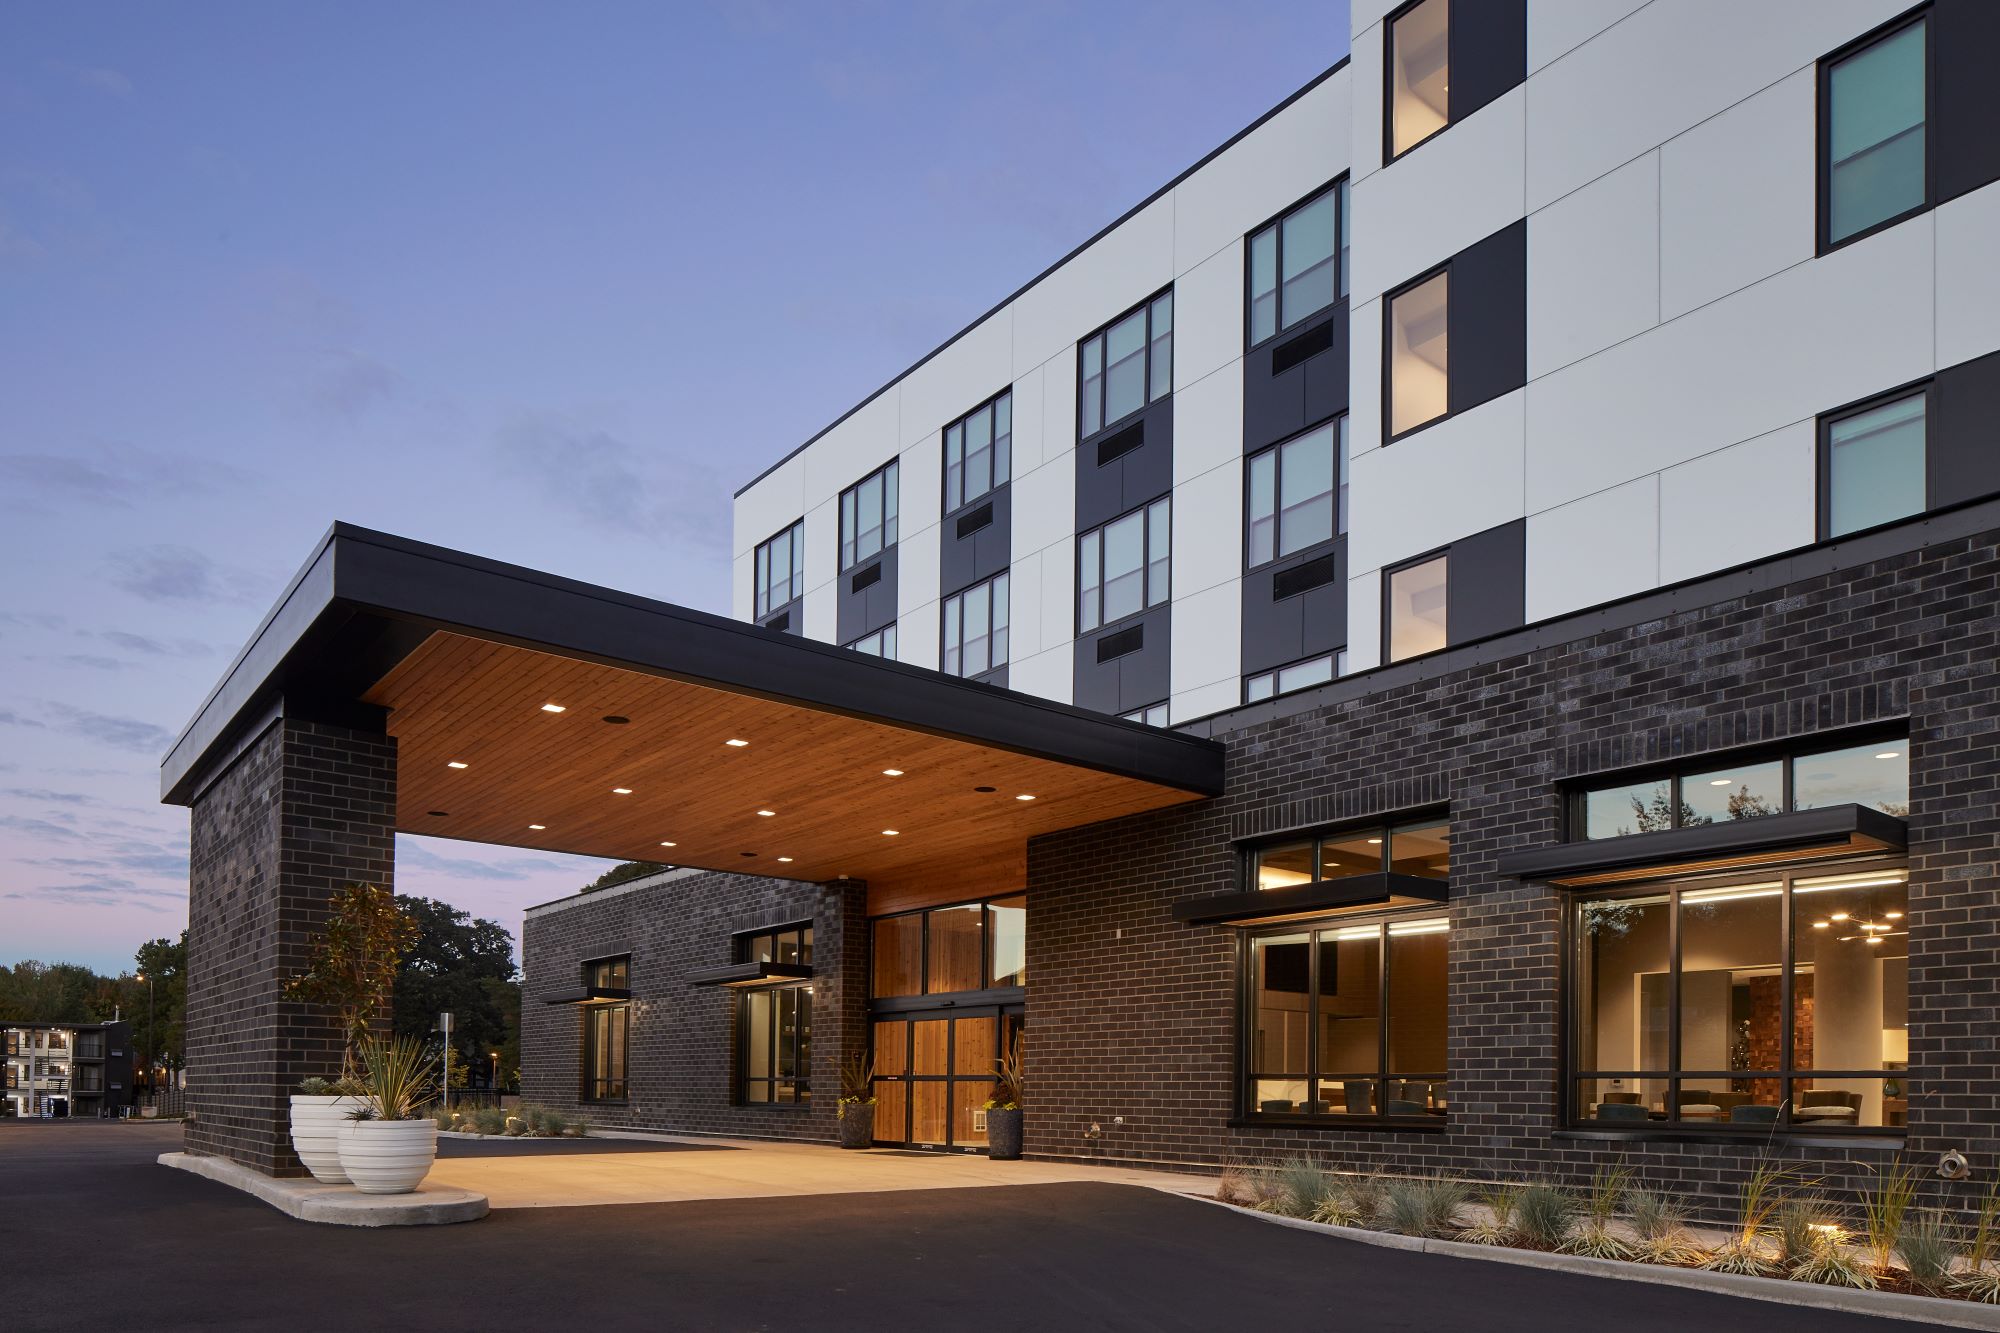 Hayward Inn a new hotel in Eugene Oregon photo of the drive thru entrance